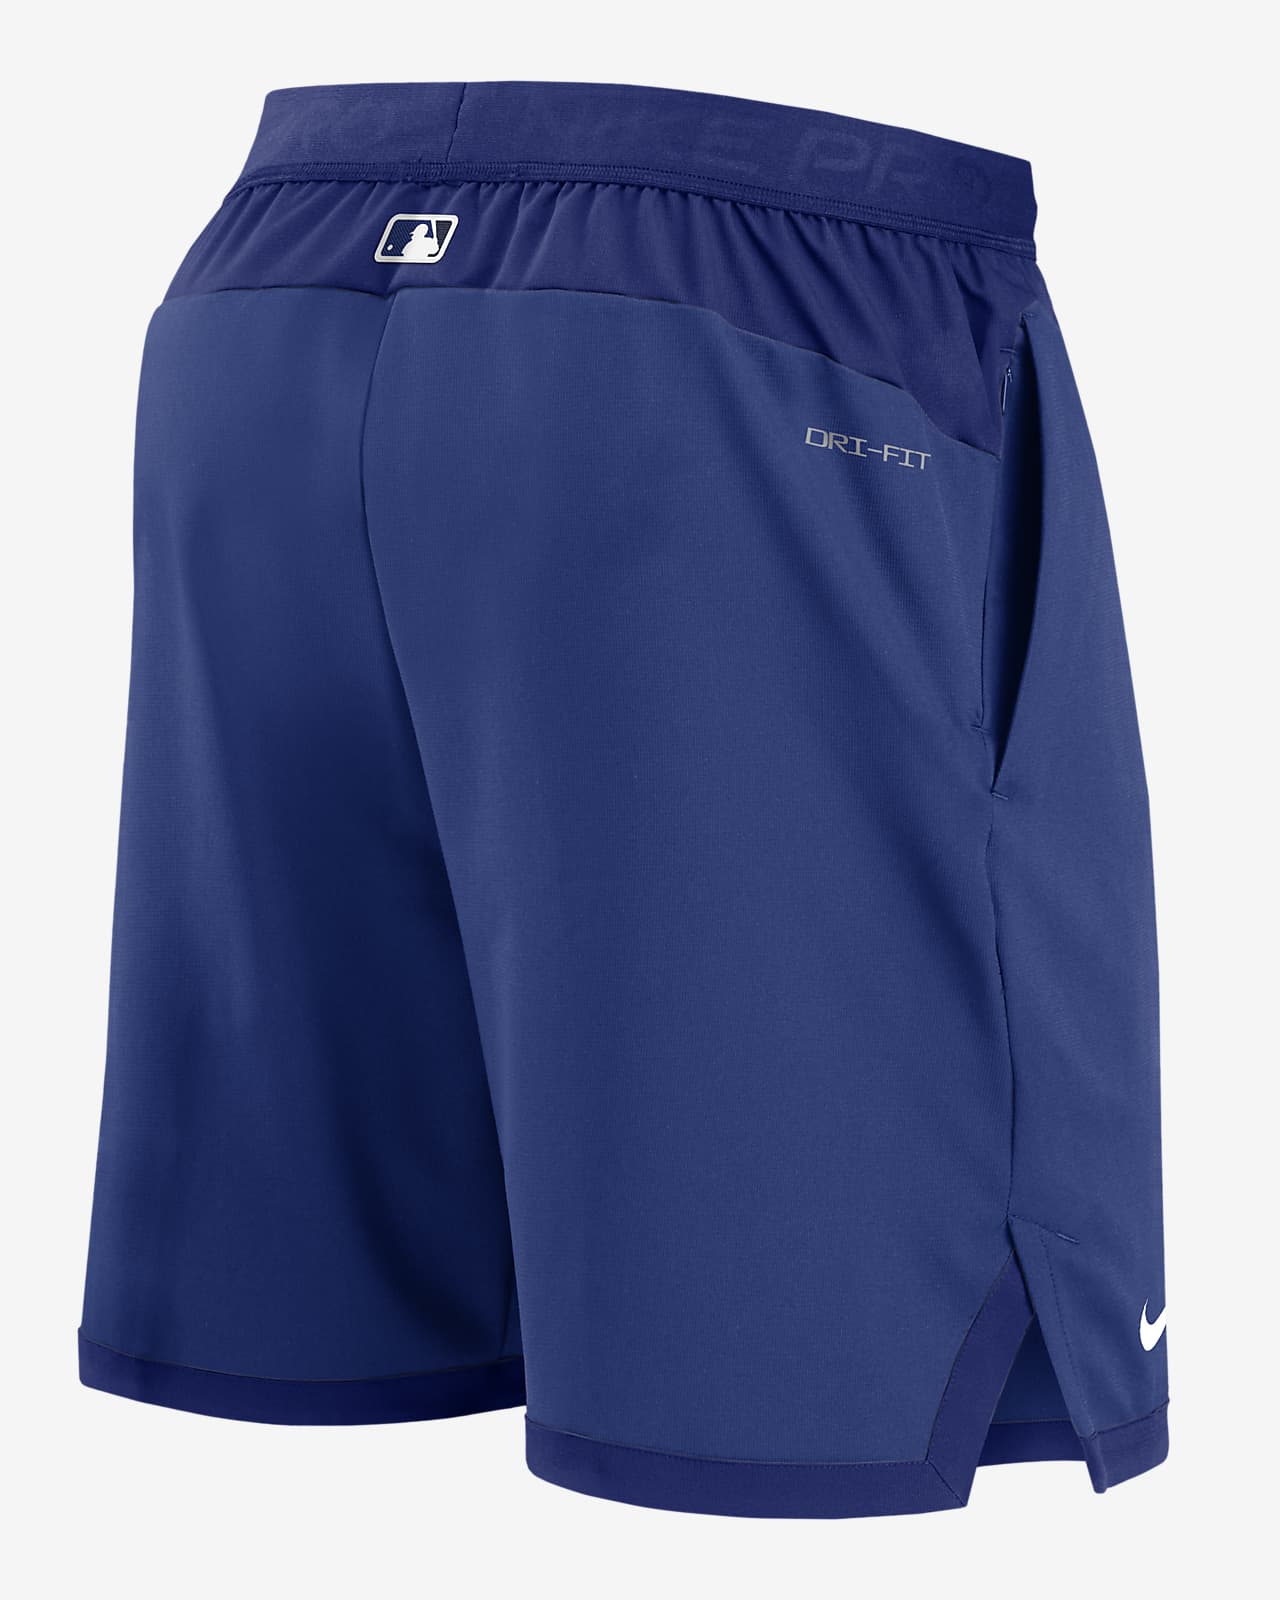 Nike Dri-FIT Flex (MLB Toronto Blue Jays) Men's Shorts.